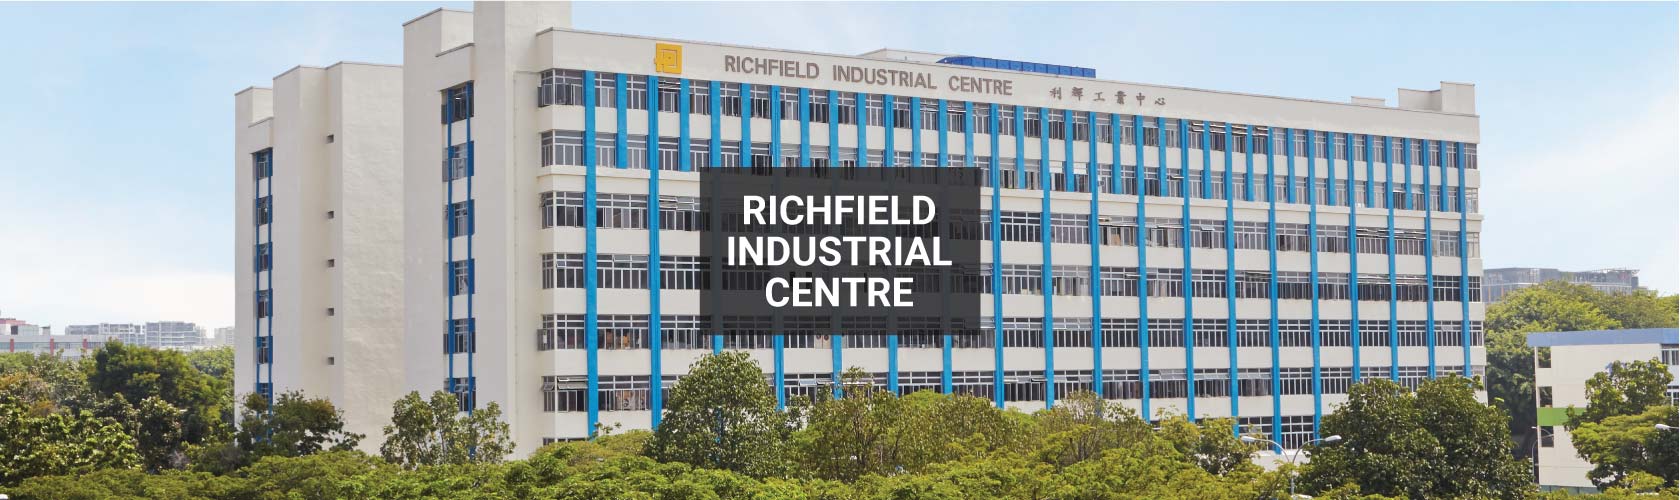 Richfield Industrial Centre Facade